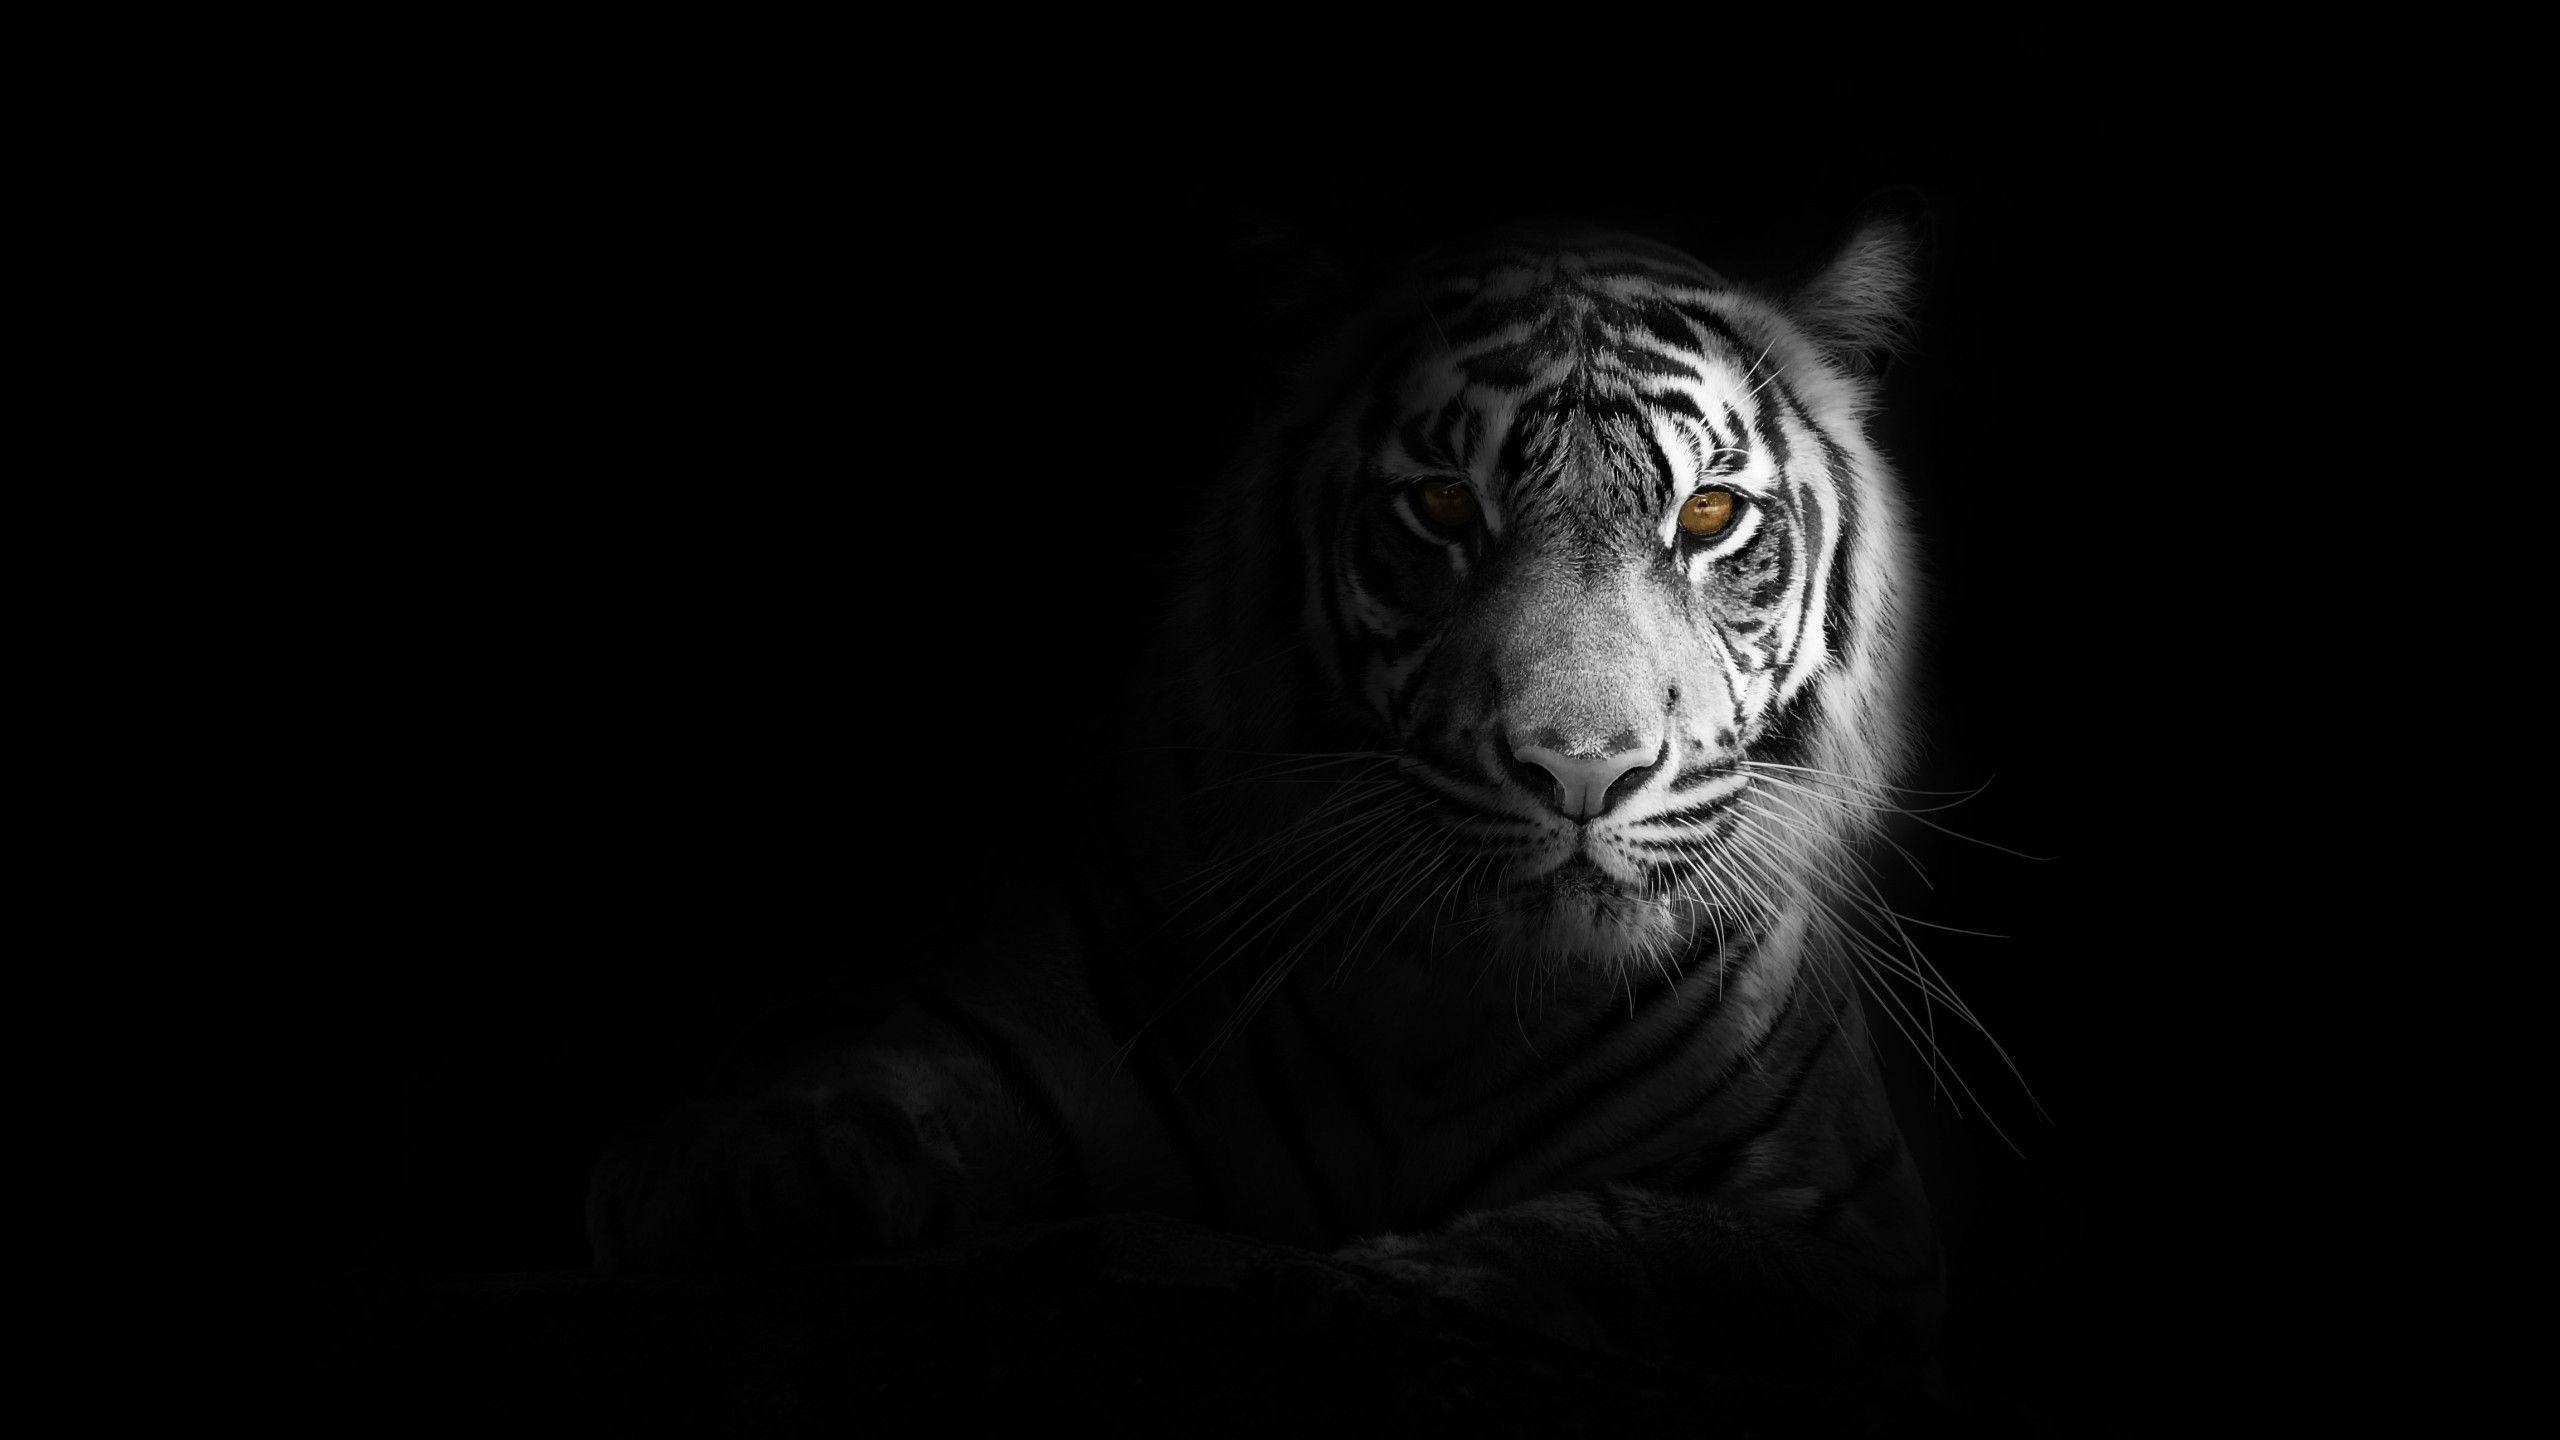 White tiger 4K Wallpaper, Bengal Tiger, Black background, 5K